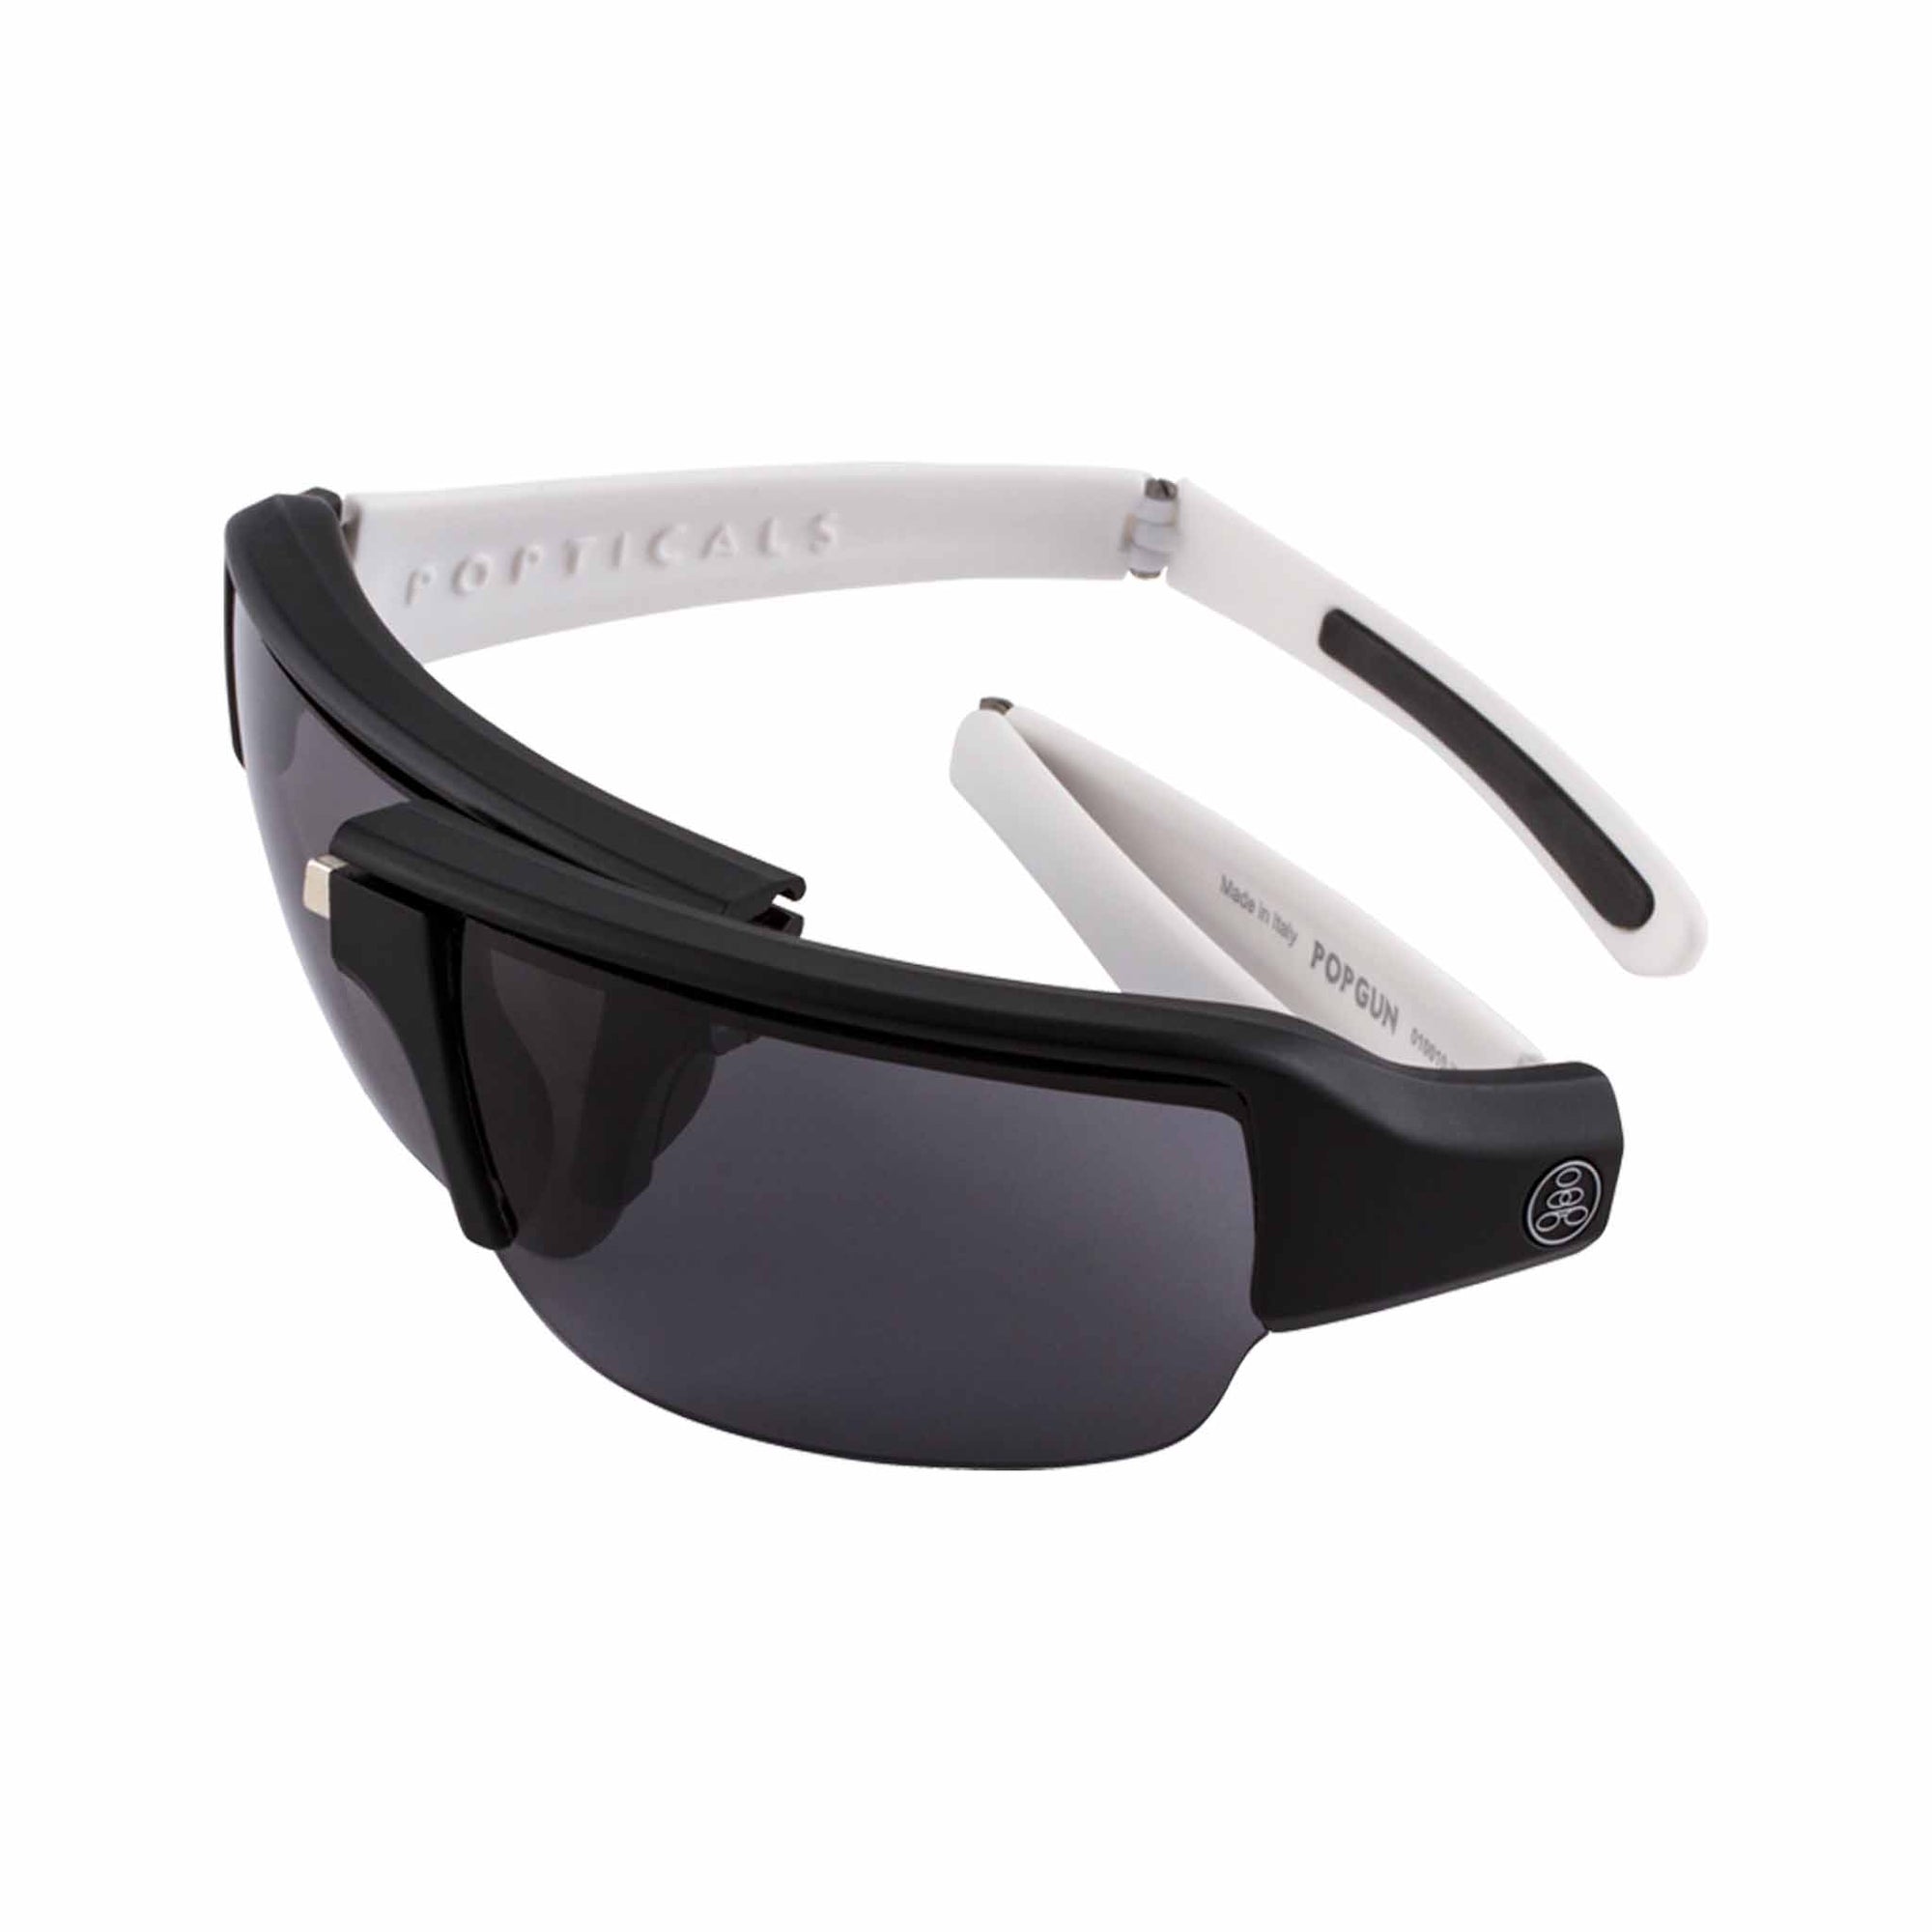 Popticals, Premium Compact Sunglasses, PopGun, 010010-WMGP, Polarized Sunglasses, Matte Black/White Frame, Gray Lenses, Spider View